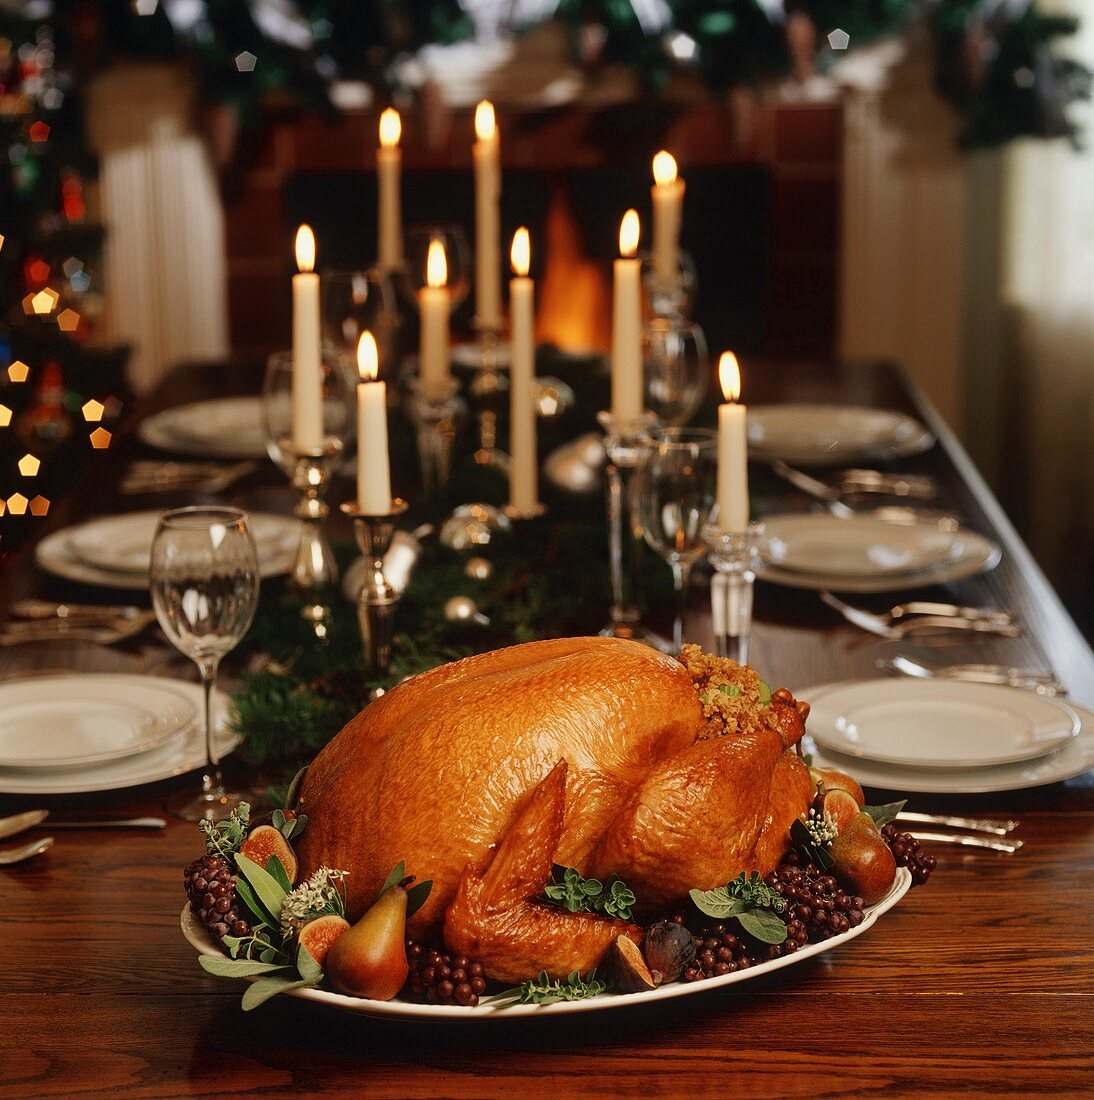 Turkey on a Table; Christmas Setting